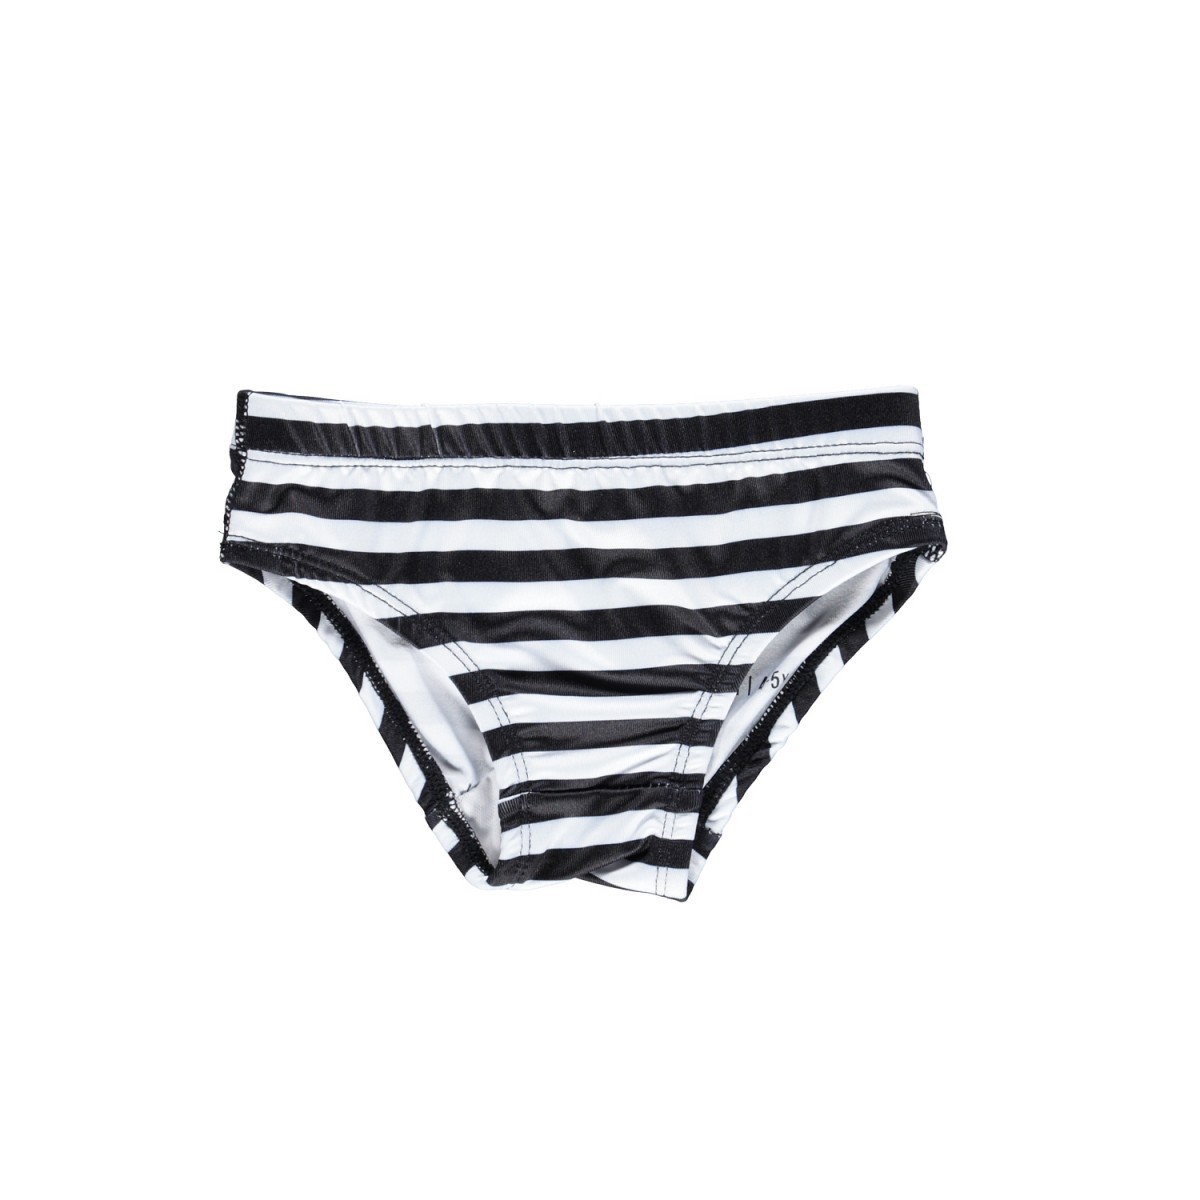 Bandit bikini pant| UV protection swim suit| Beach & Bandits |Dubai